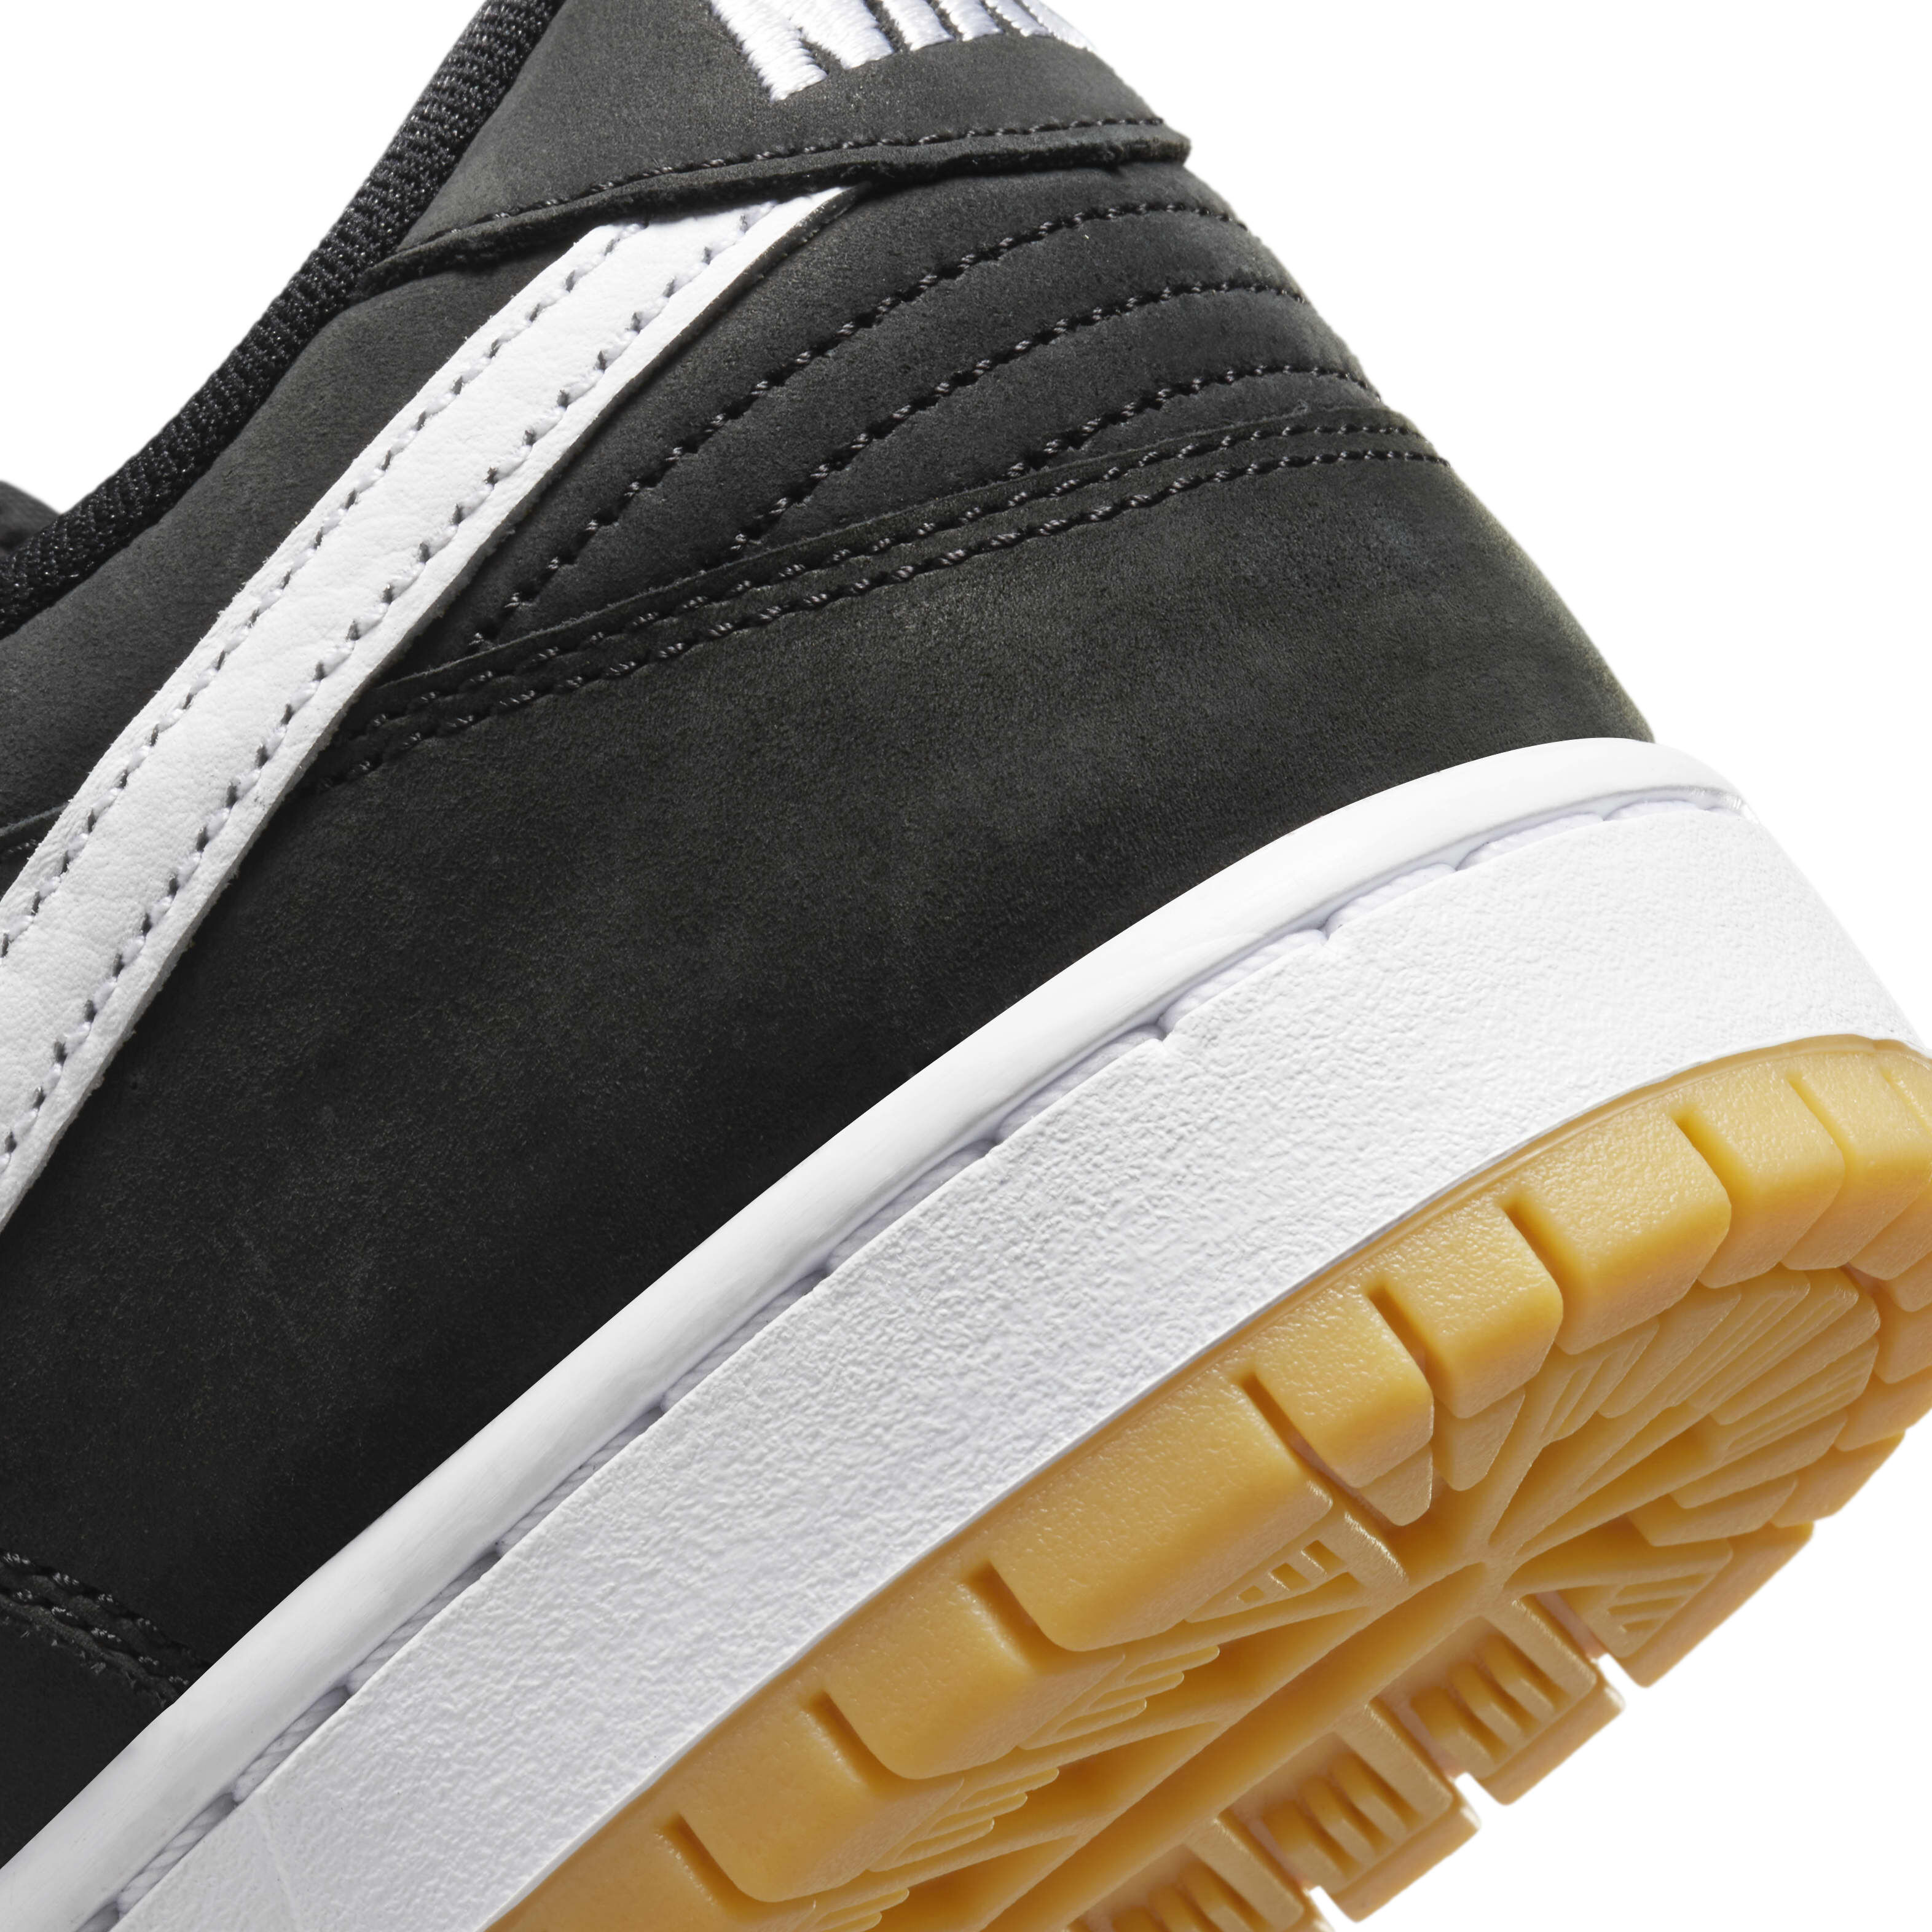 Buy Nike SB Dunk Low Pro AA Skate Shoes | Nike Saudi Official